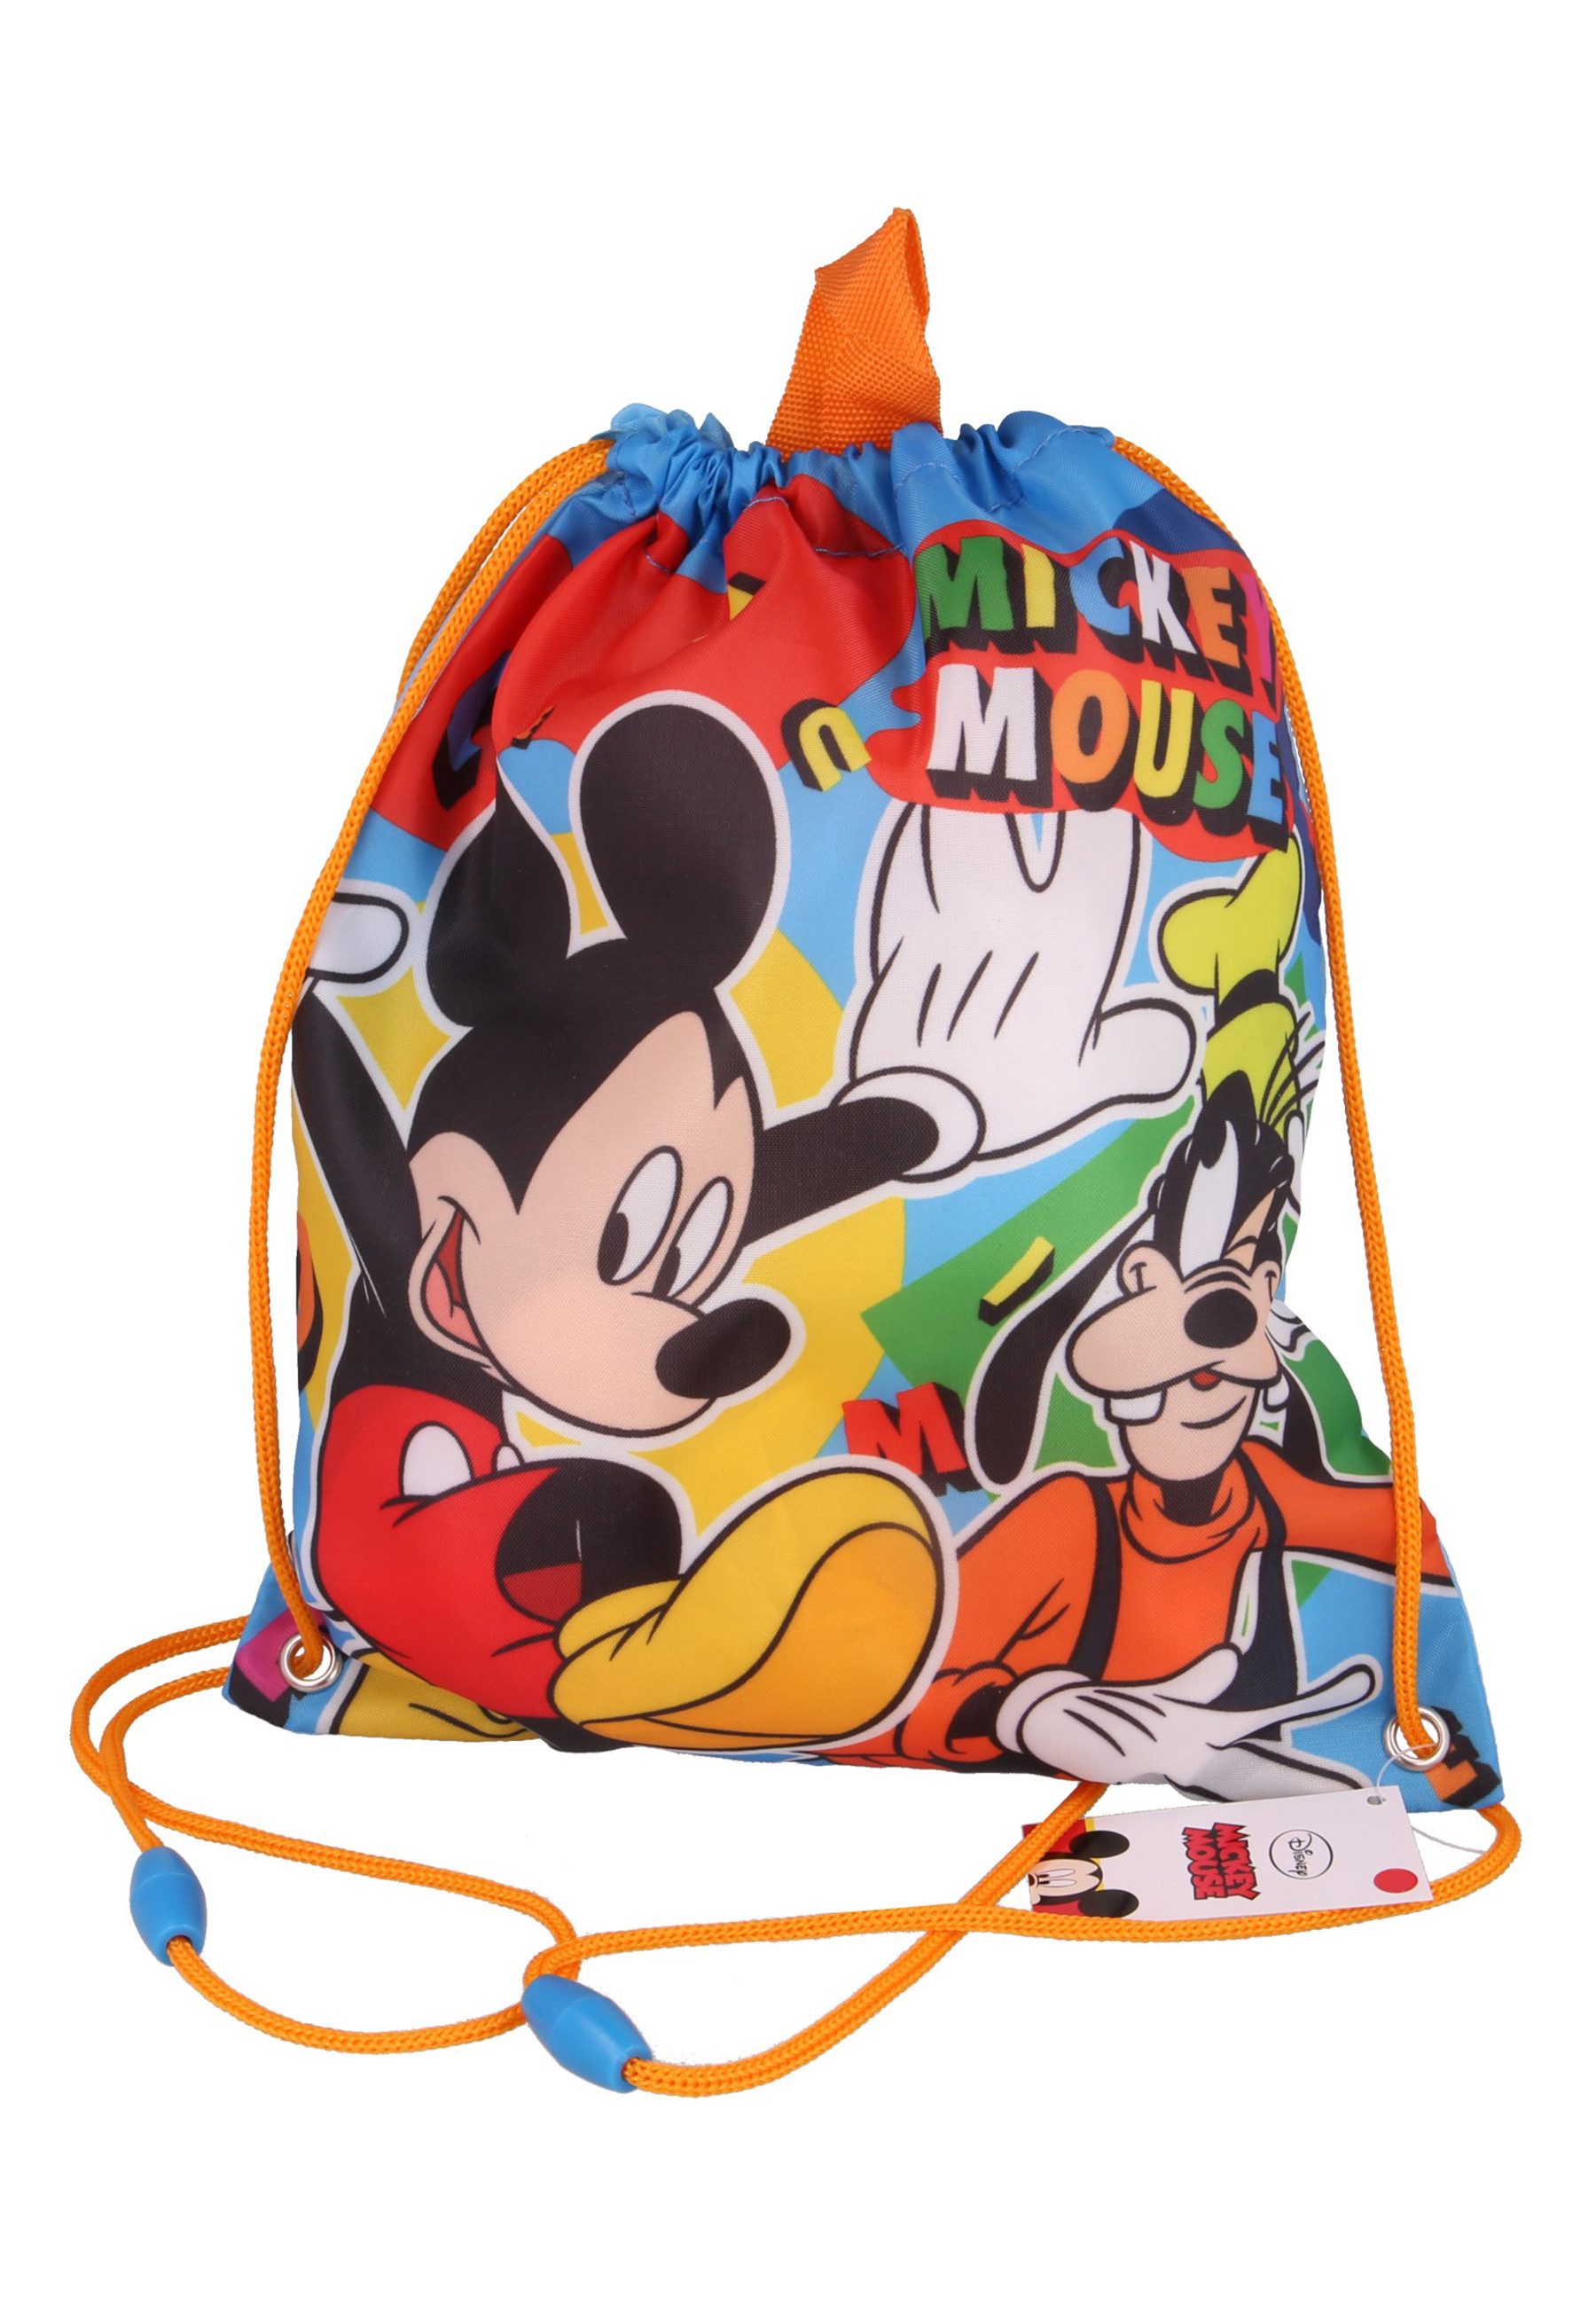 Disney Mickey Mouse Turnbeutel Cool Summer Kinder Jungen Lunch Bag Sportbeutel Schuhbeutel